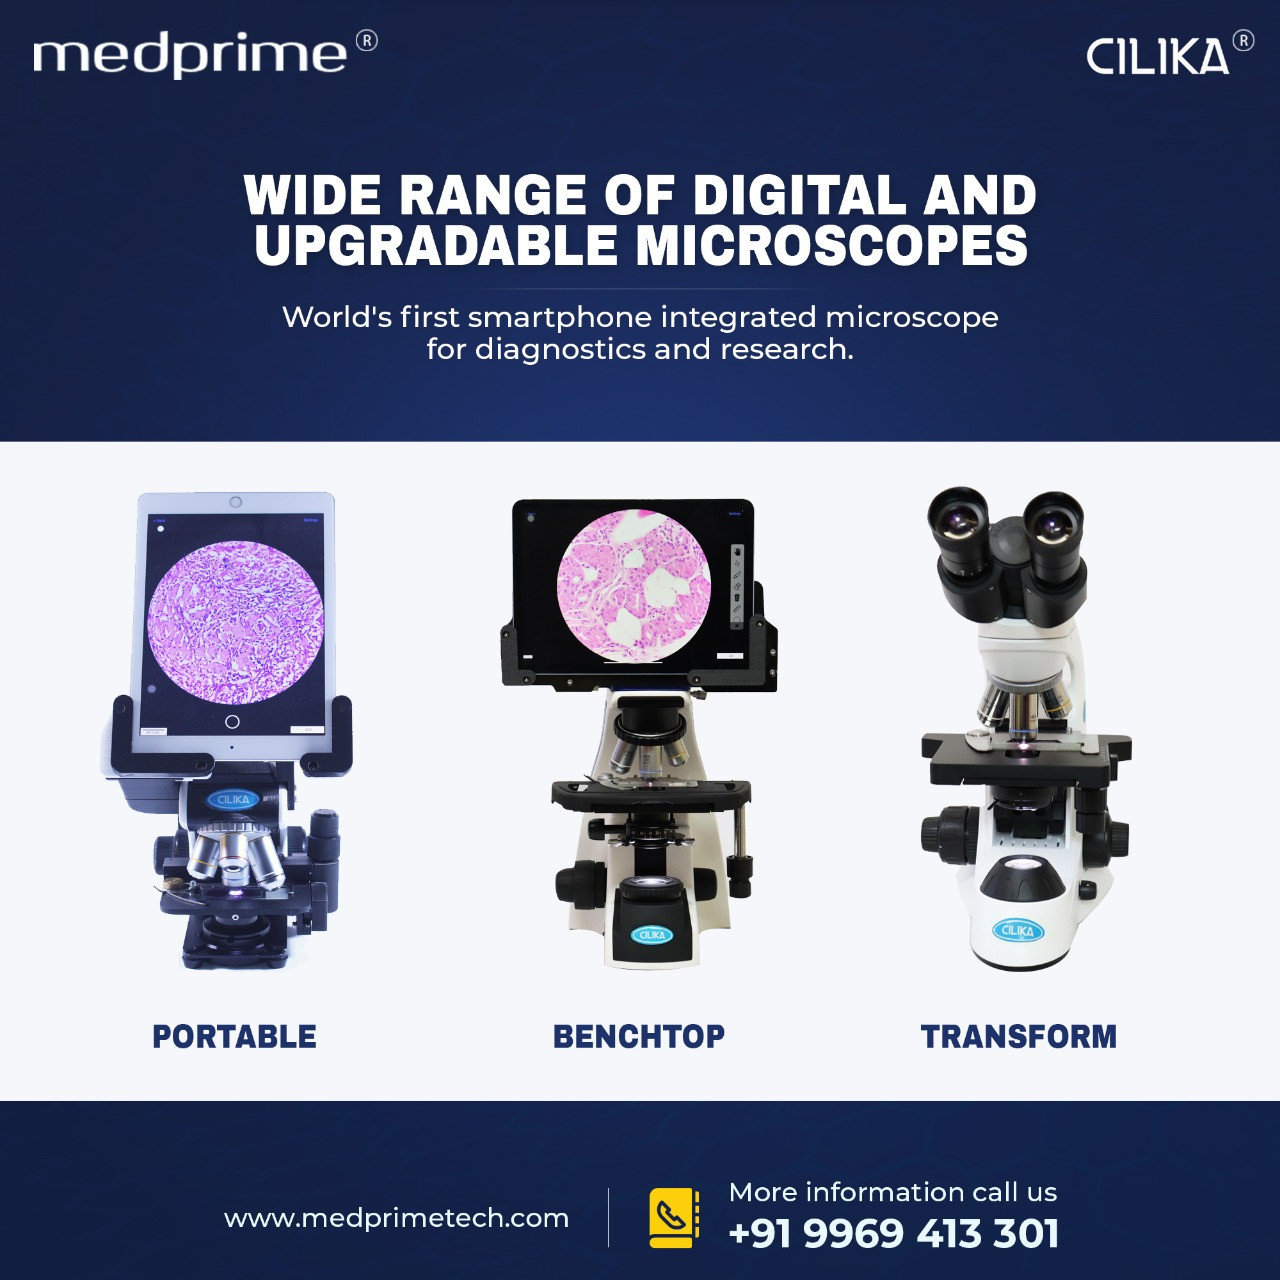 microscope-upgrade